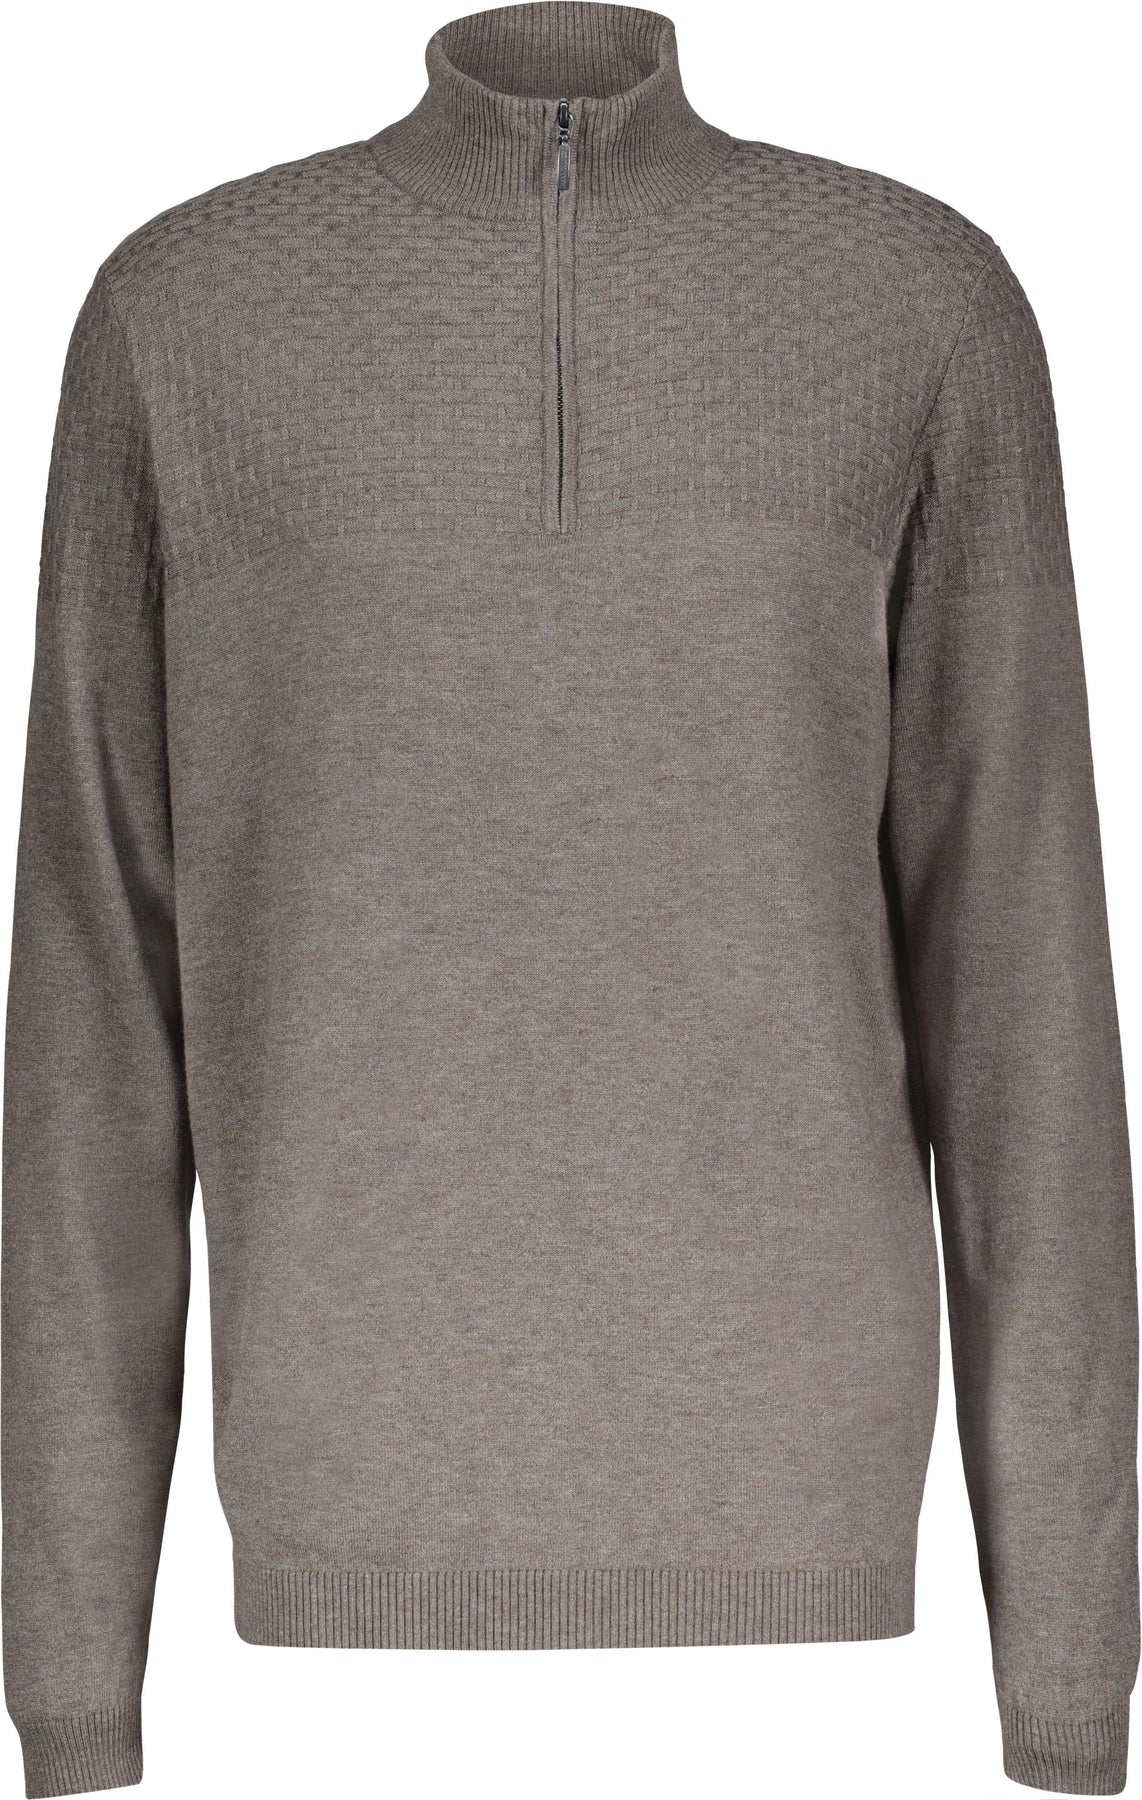 Halvsten Sweater - Mid Brown Melange